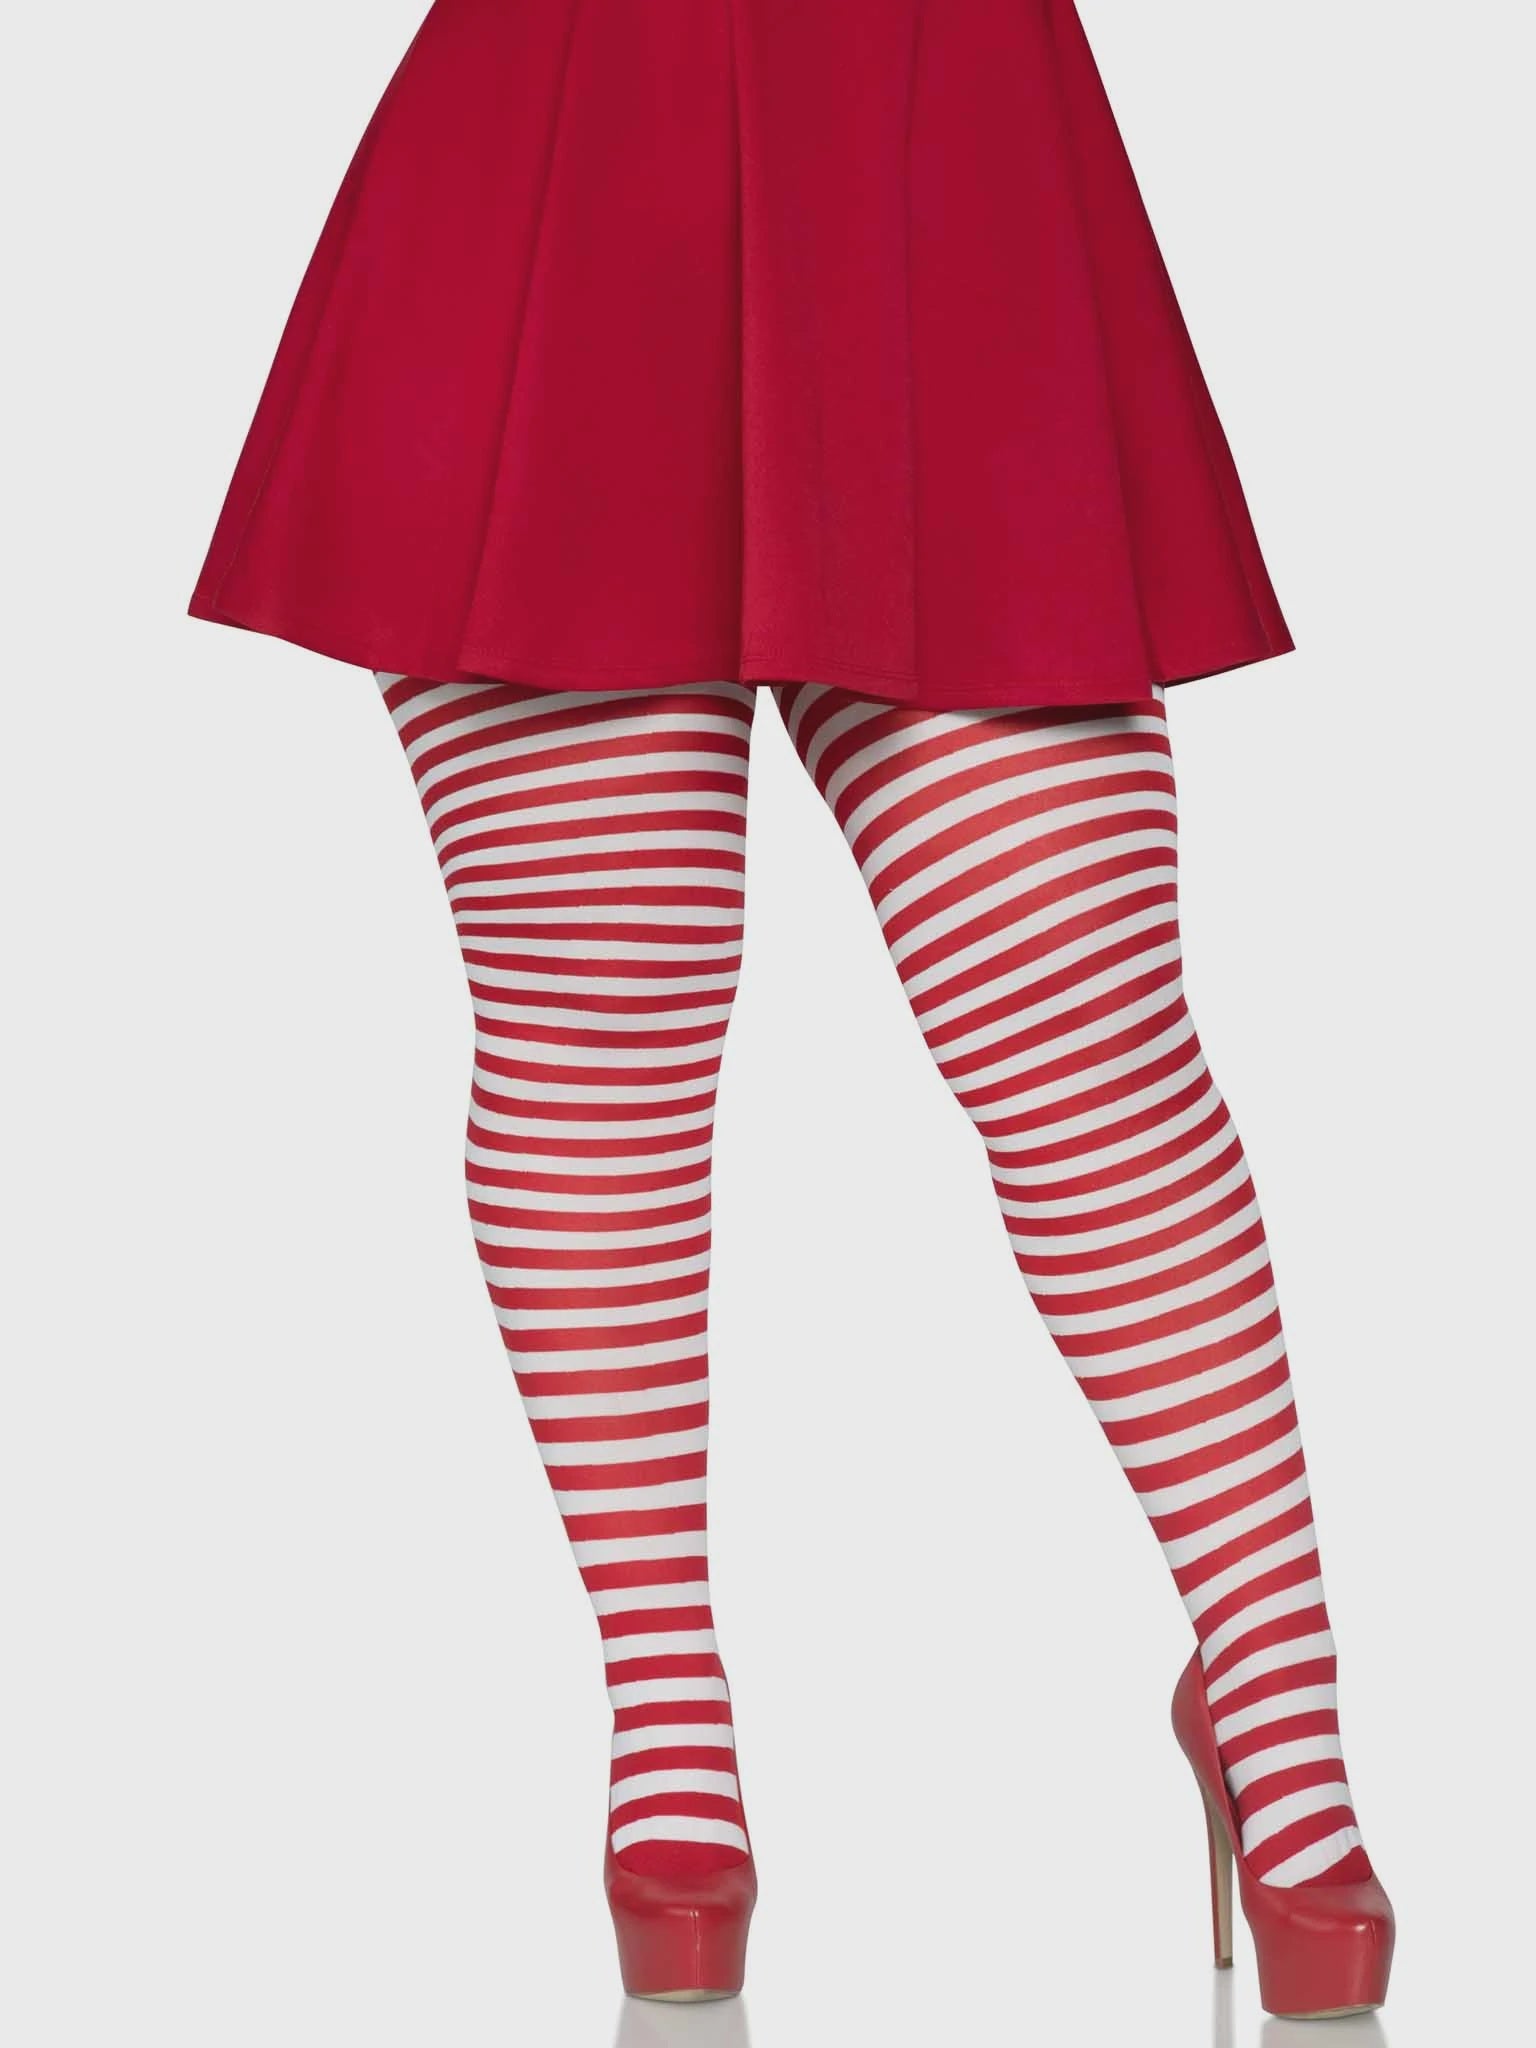 Leg Avenue Women's Nylon Striped Stockings